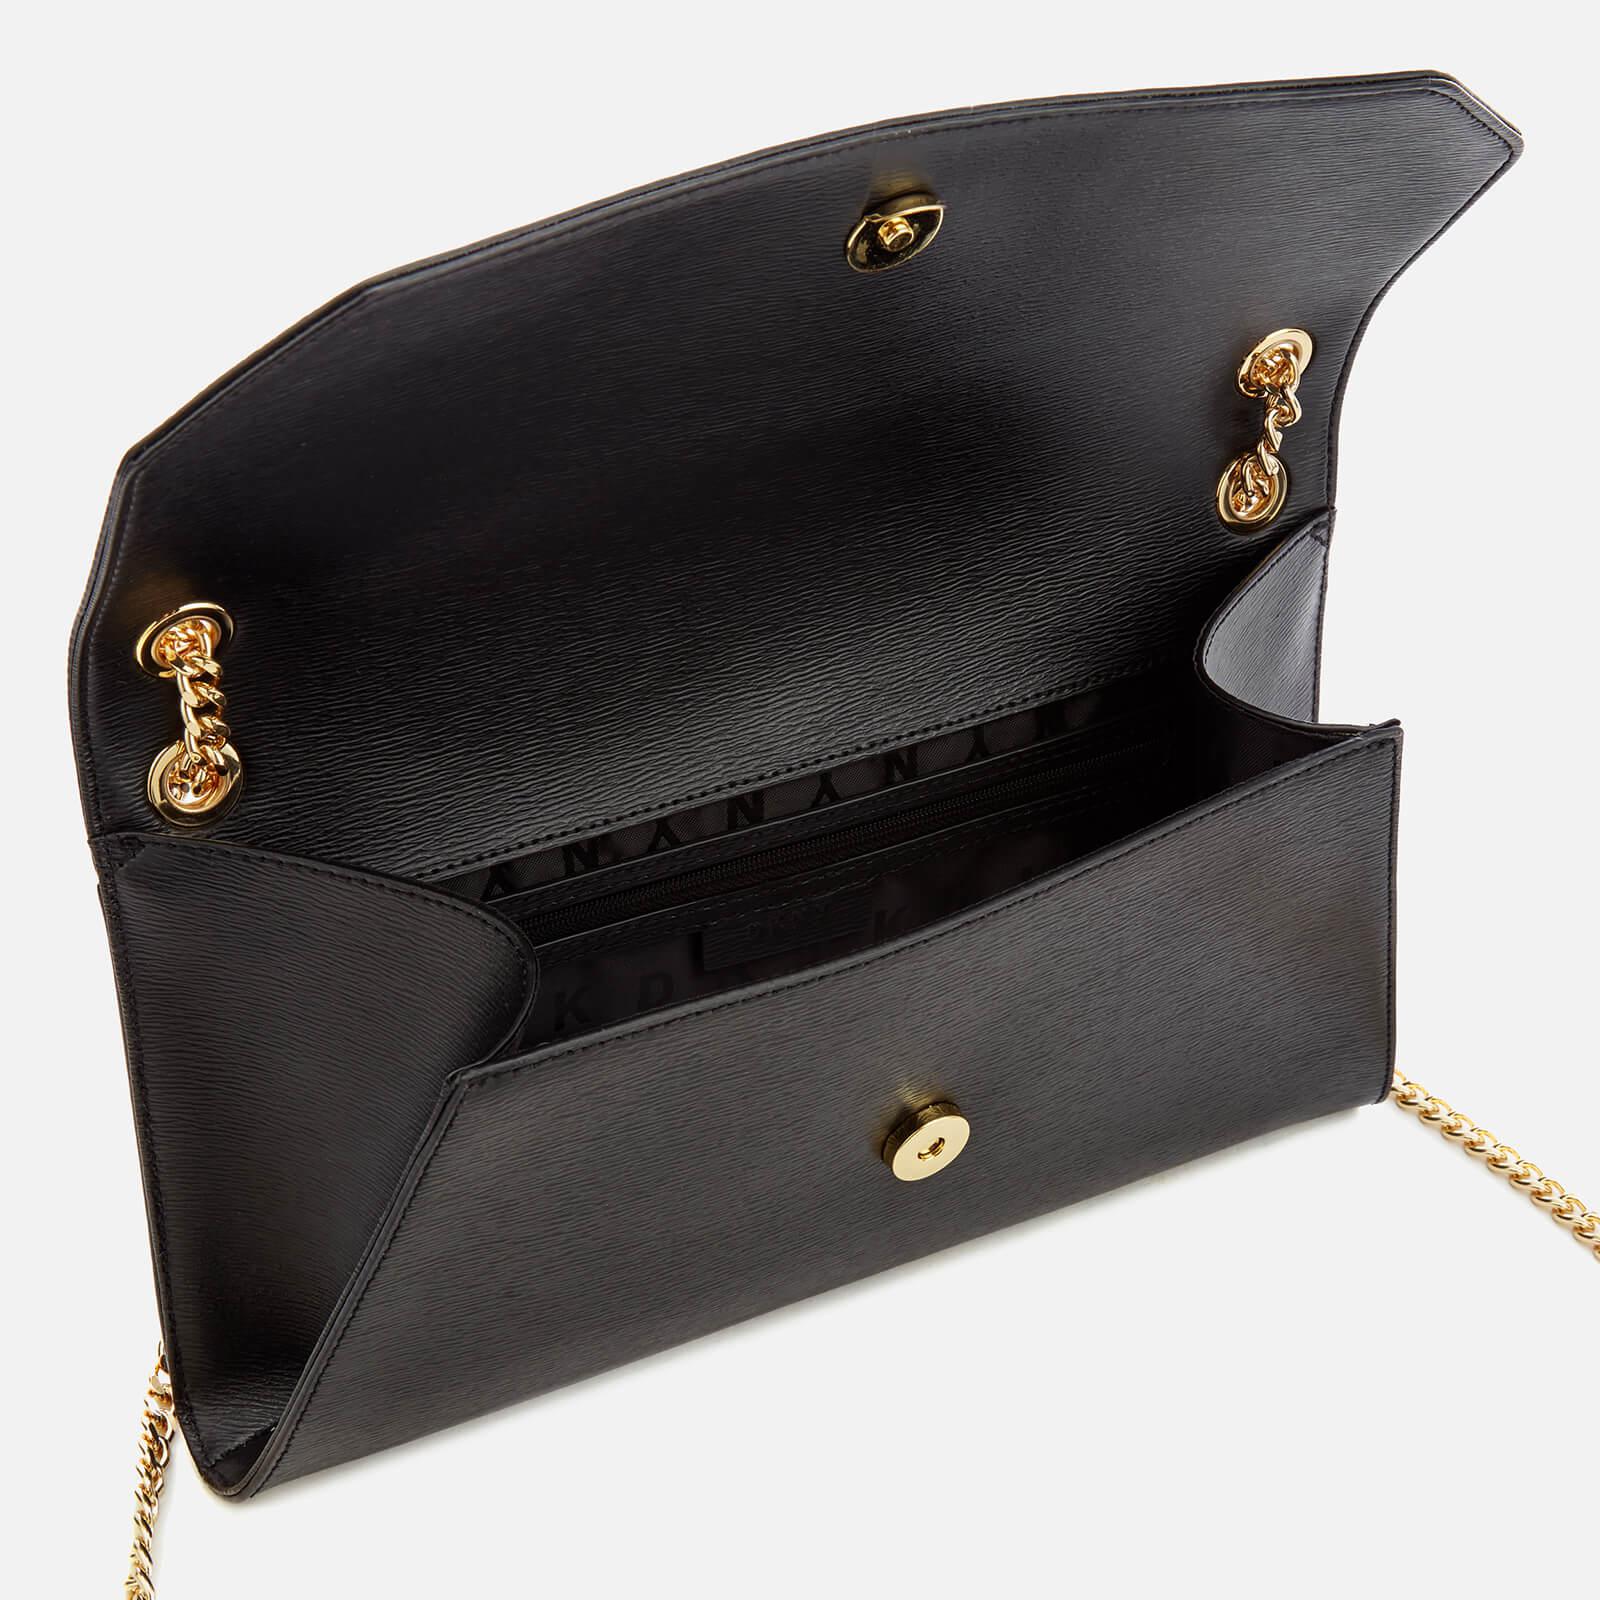 DKNY Leather Bryant Envelope Clutch Bag in Black - Lyst